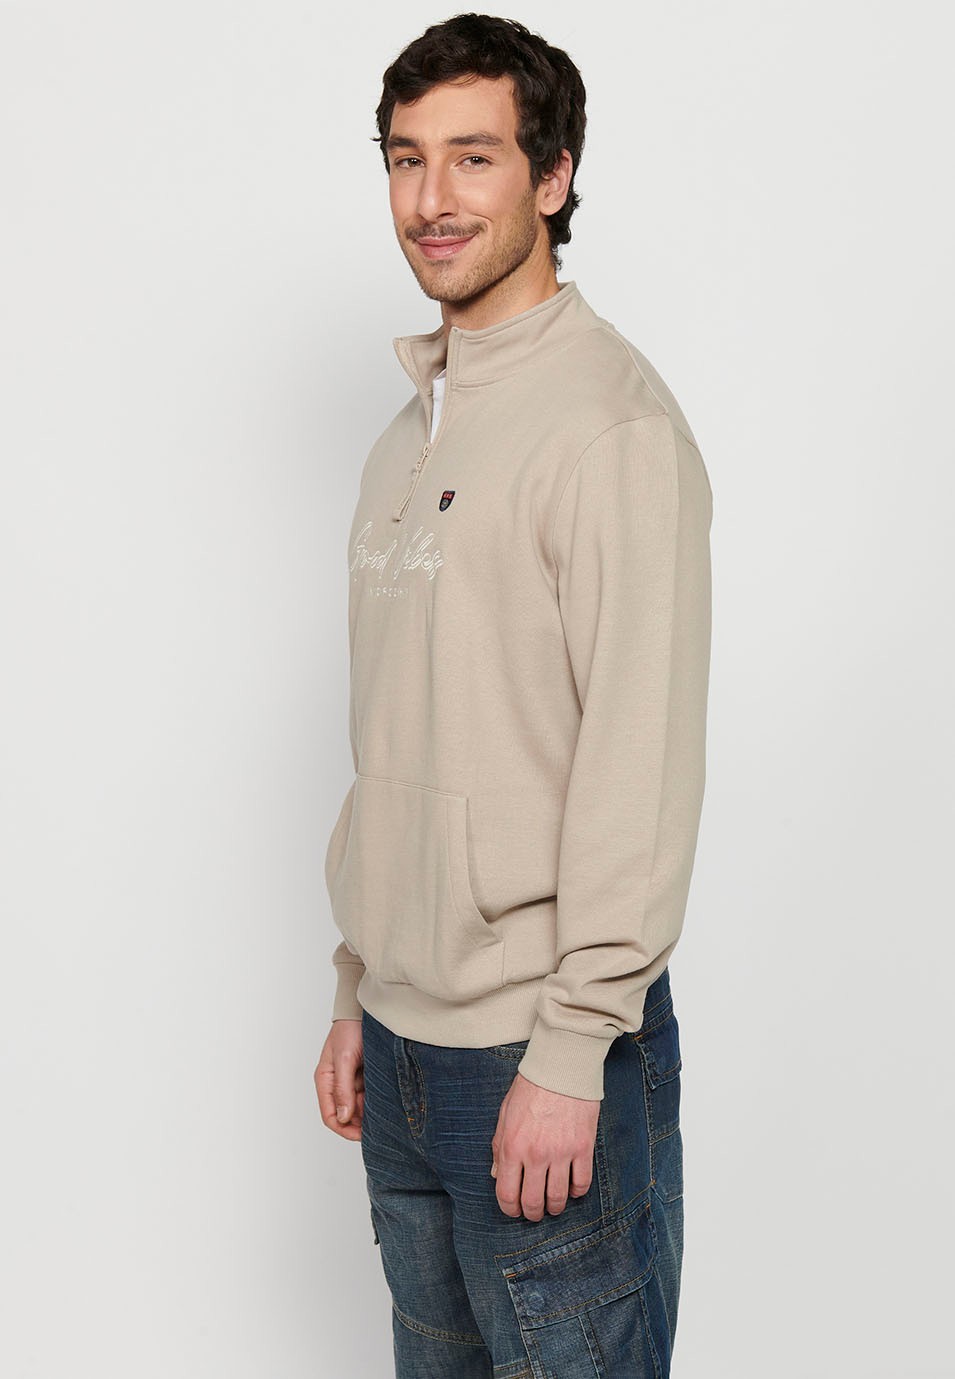 Men's Stone Color Front Detail Zipper Turtleneck Long Sleeve Sweatshirt